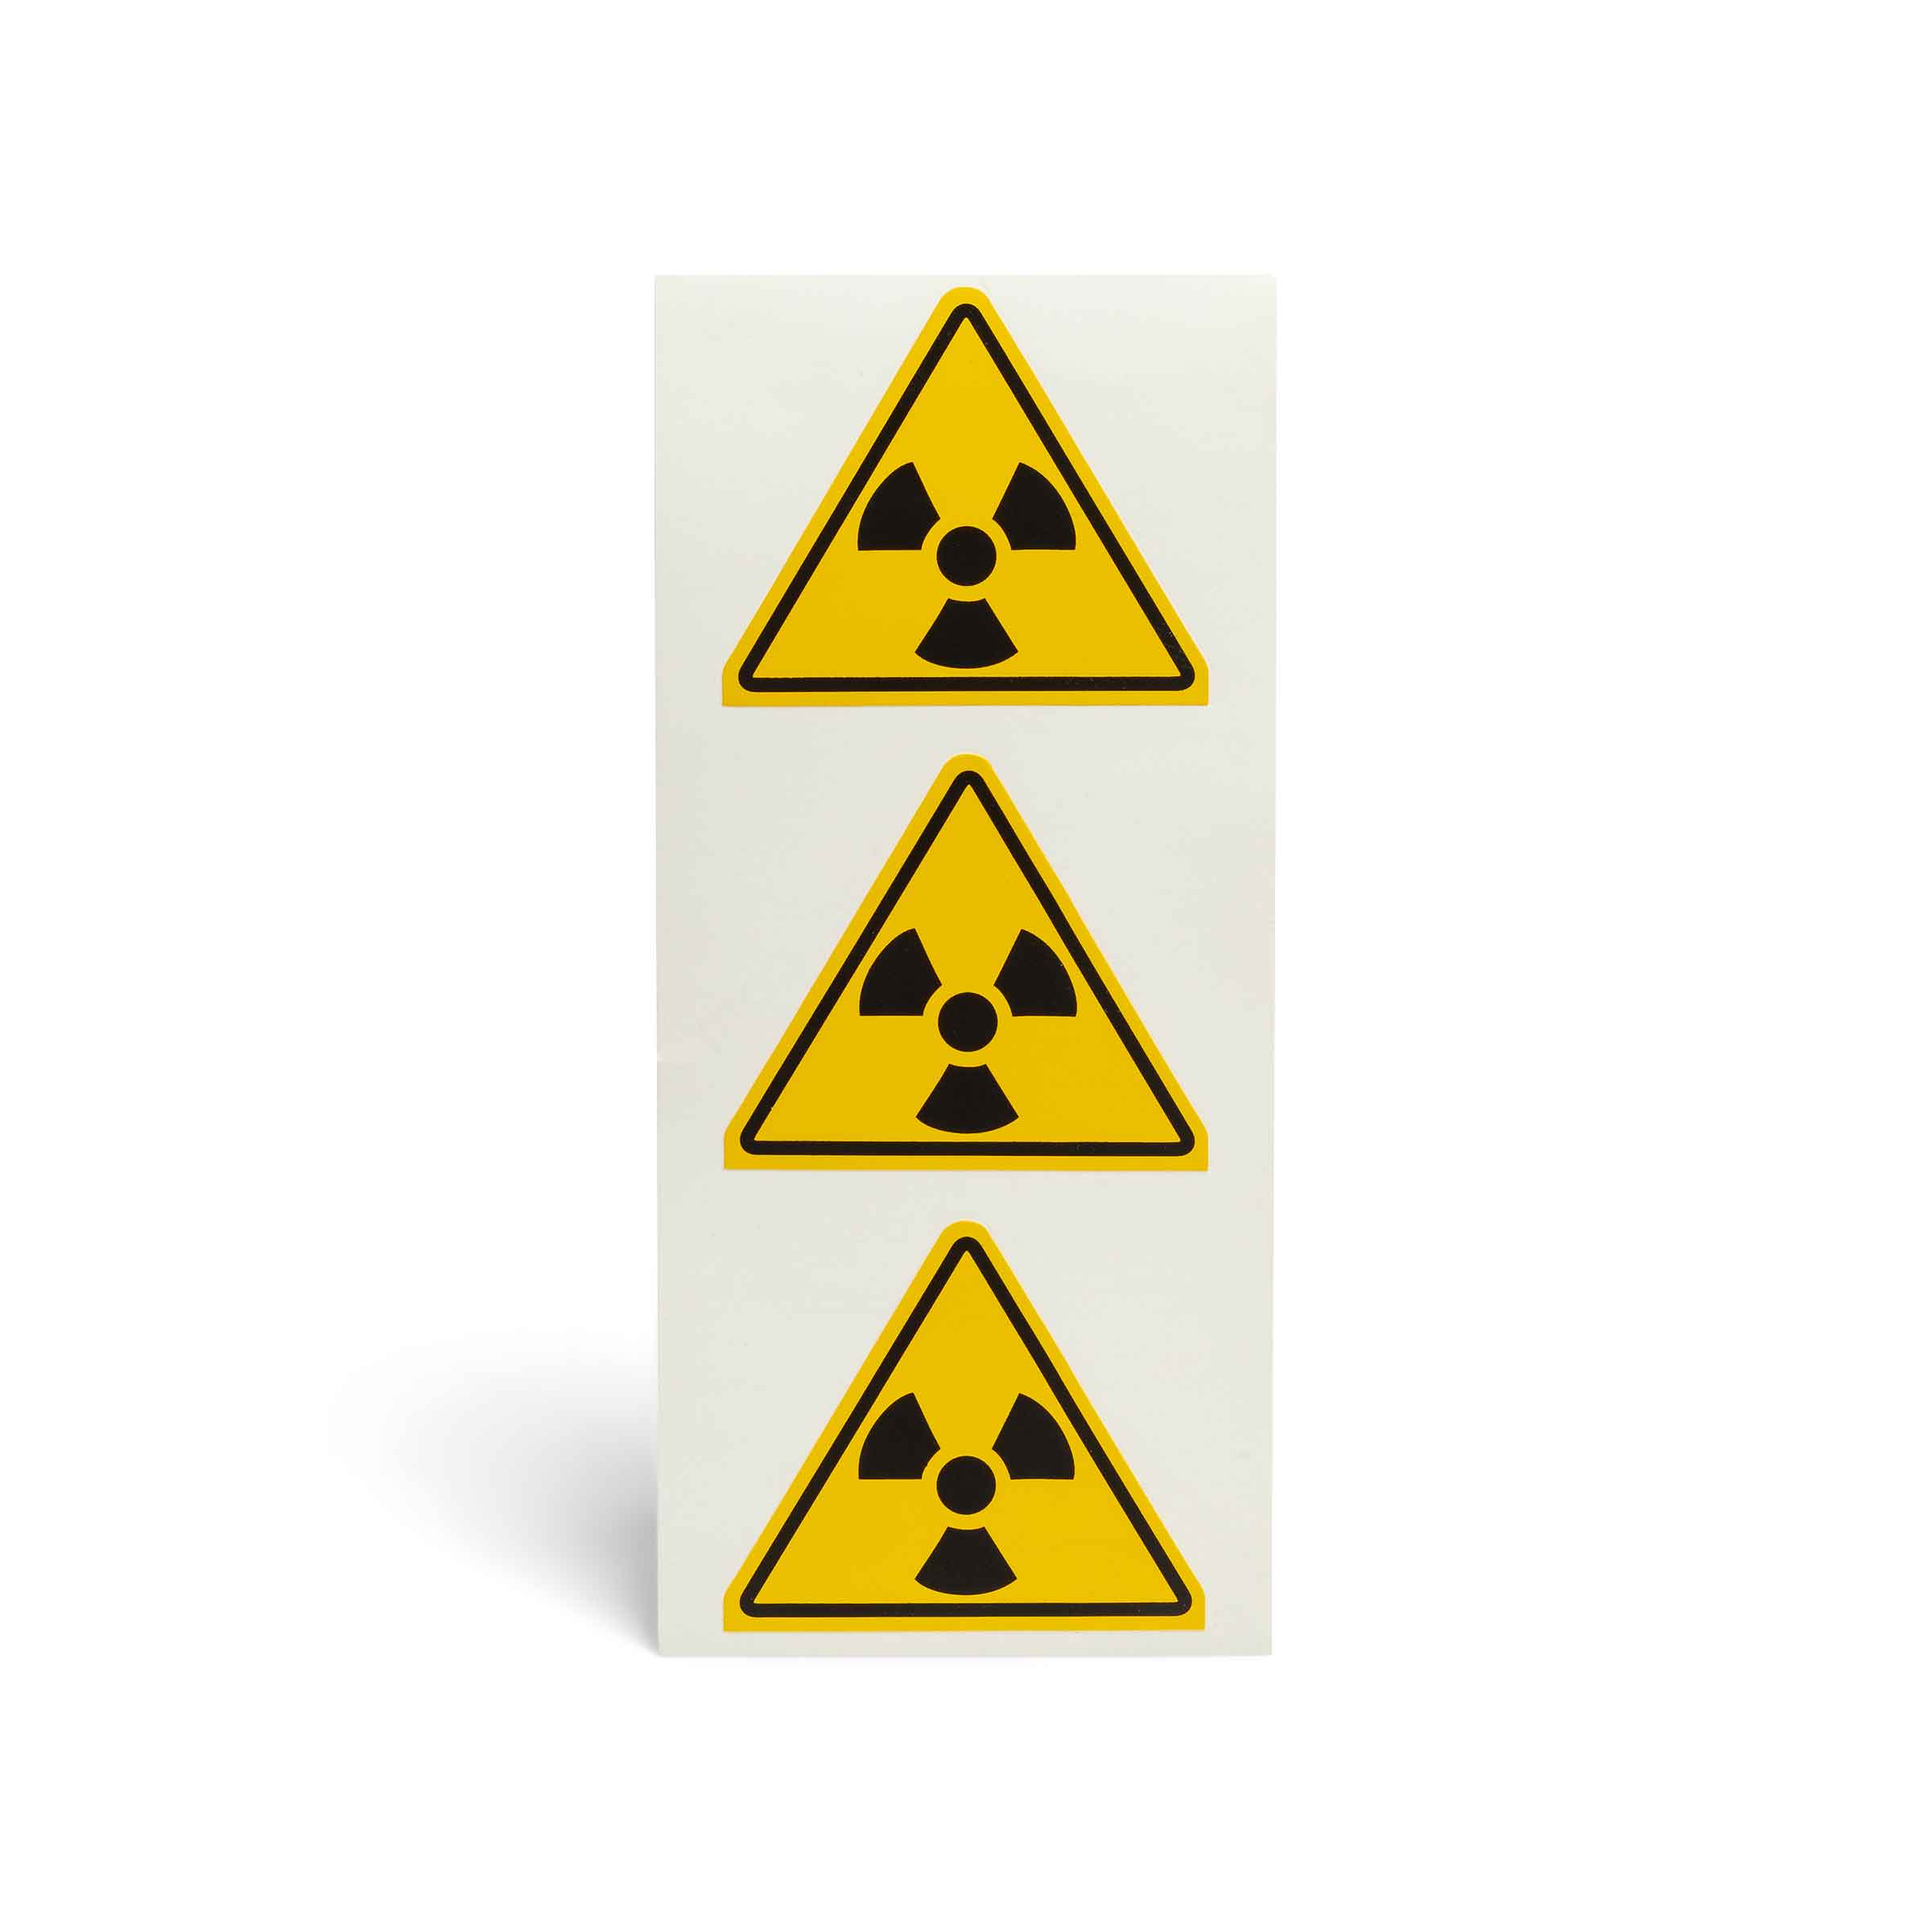 Self-adhesive warning stickers